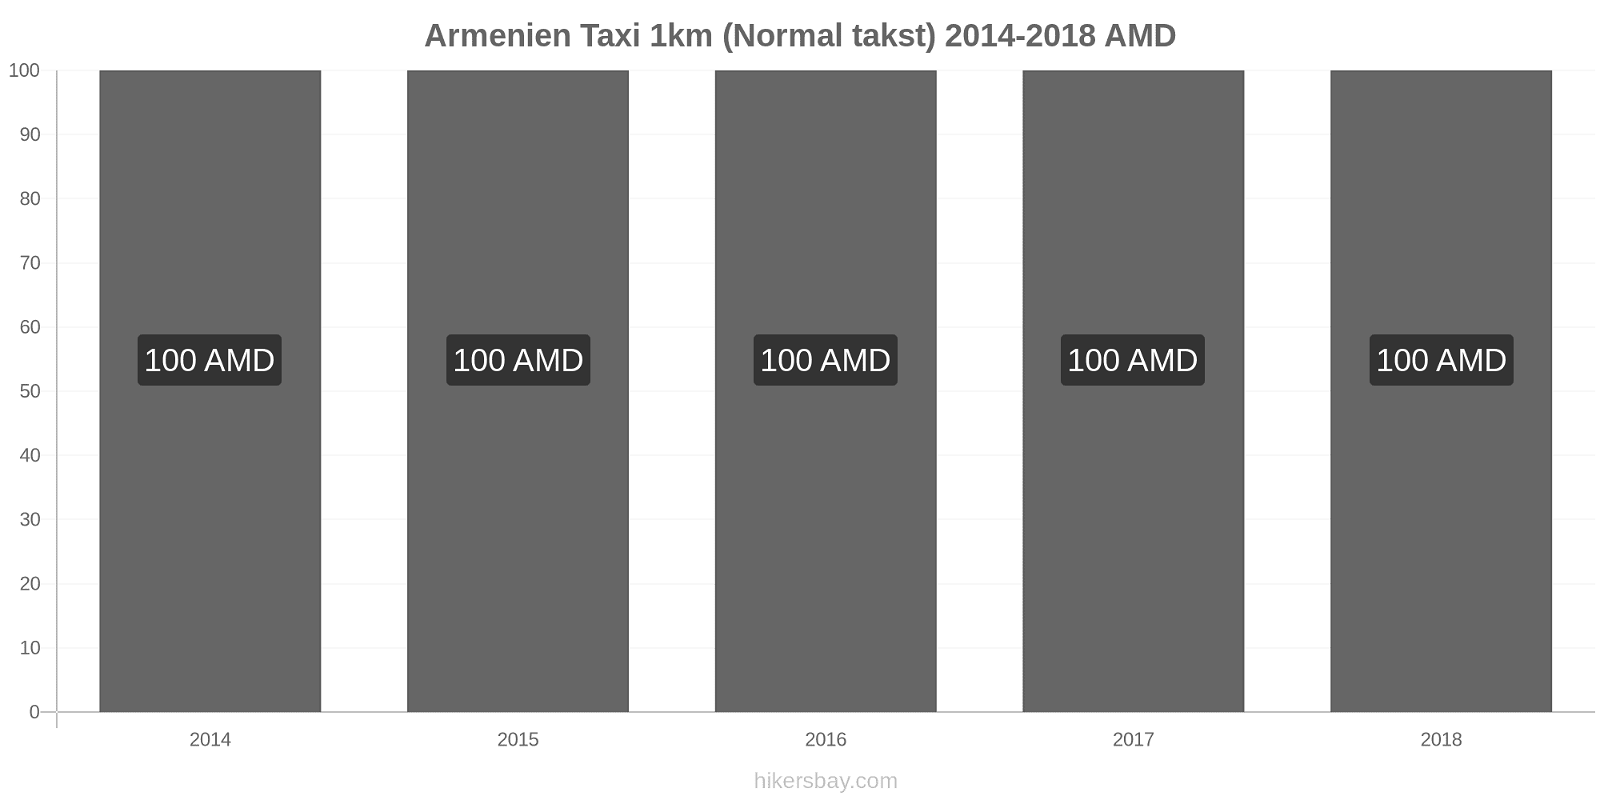 Armenien prisændringer Taxi 1km (normal takst) hikersbay.com